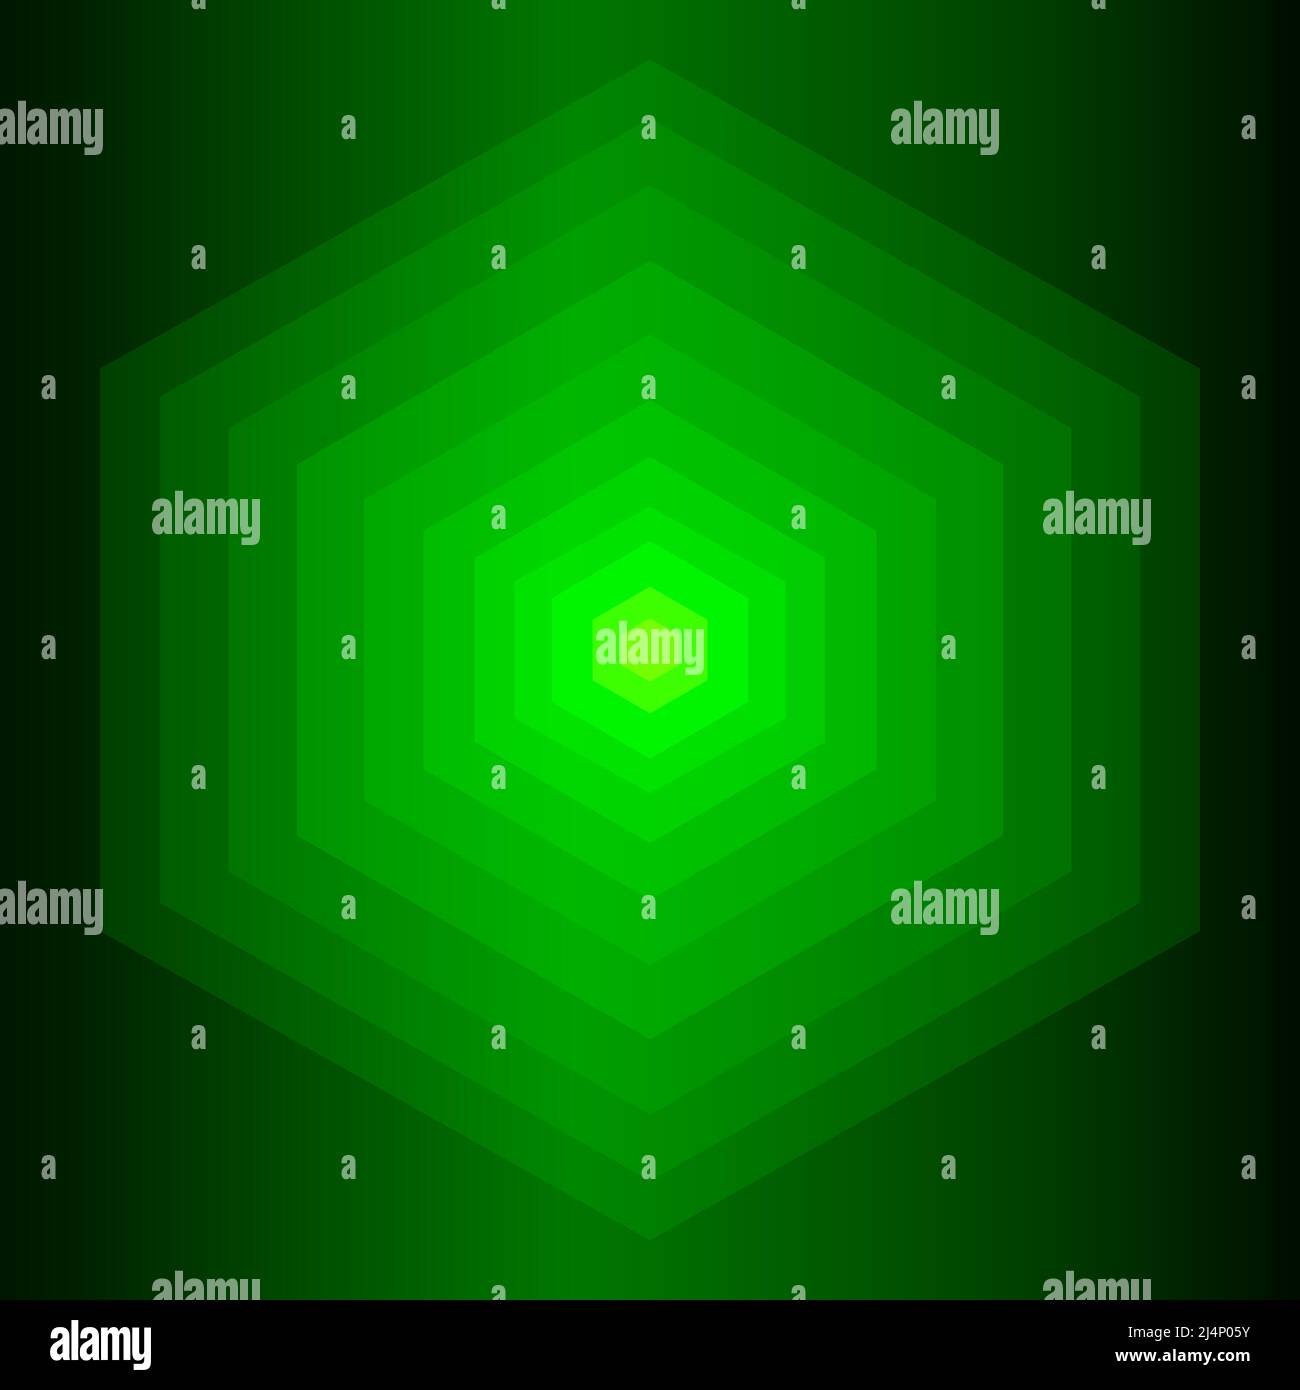 Abstrakt Hintergrund grün Form Hexagon Tapete Vorlage Vektor-Illustration Stock Vektor